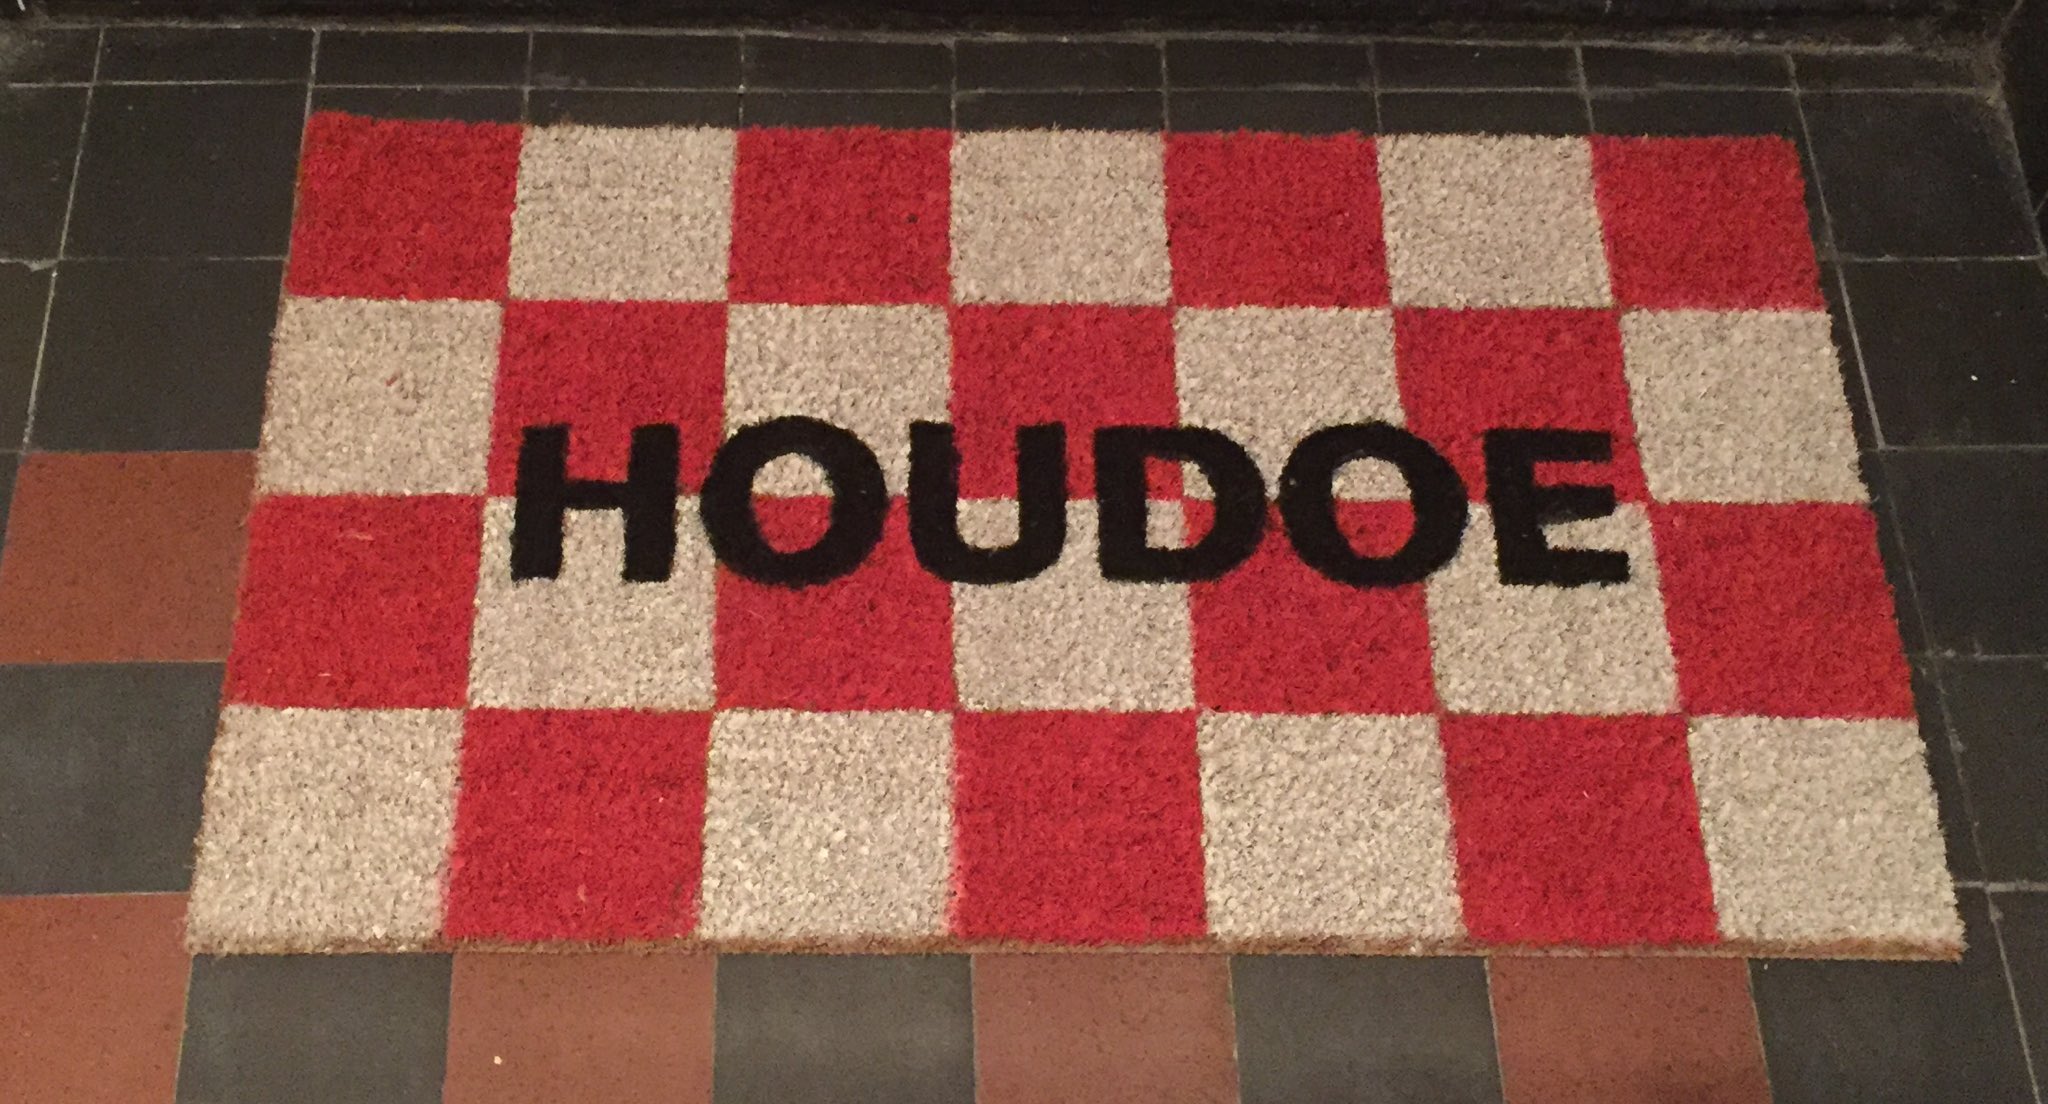 werkplaats Tragisch Afkorting Roeland Roovers on Twitter: "Nieuwe deurmat #houdoe  https://t.co/ewCfPsVkWy" / Twitter